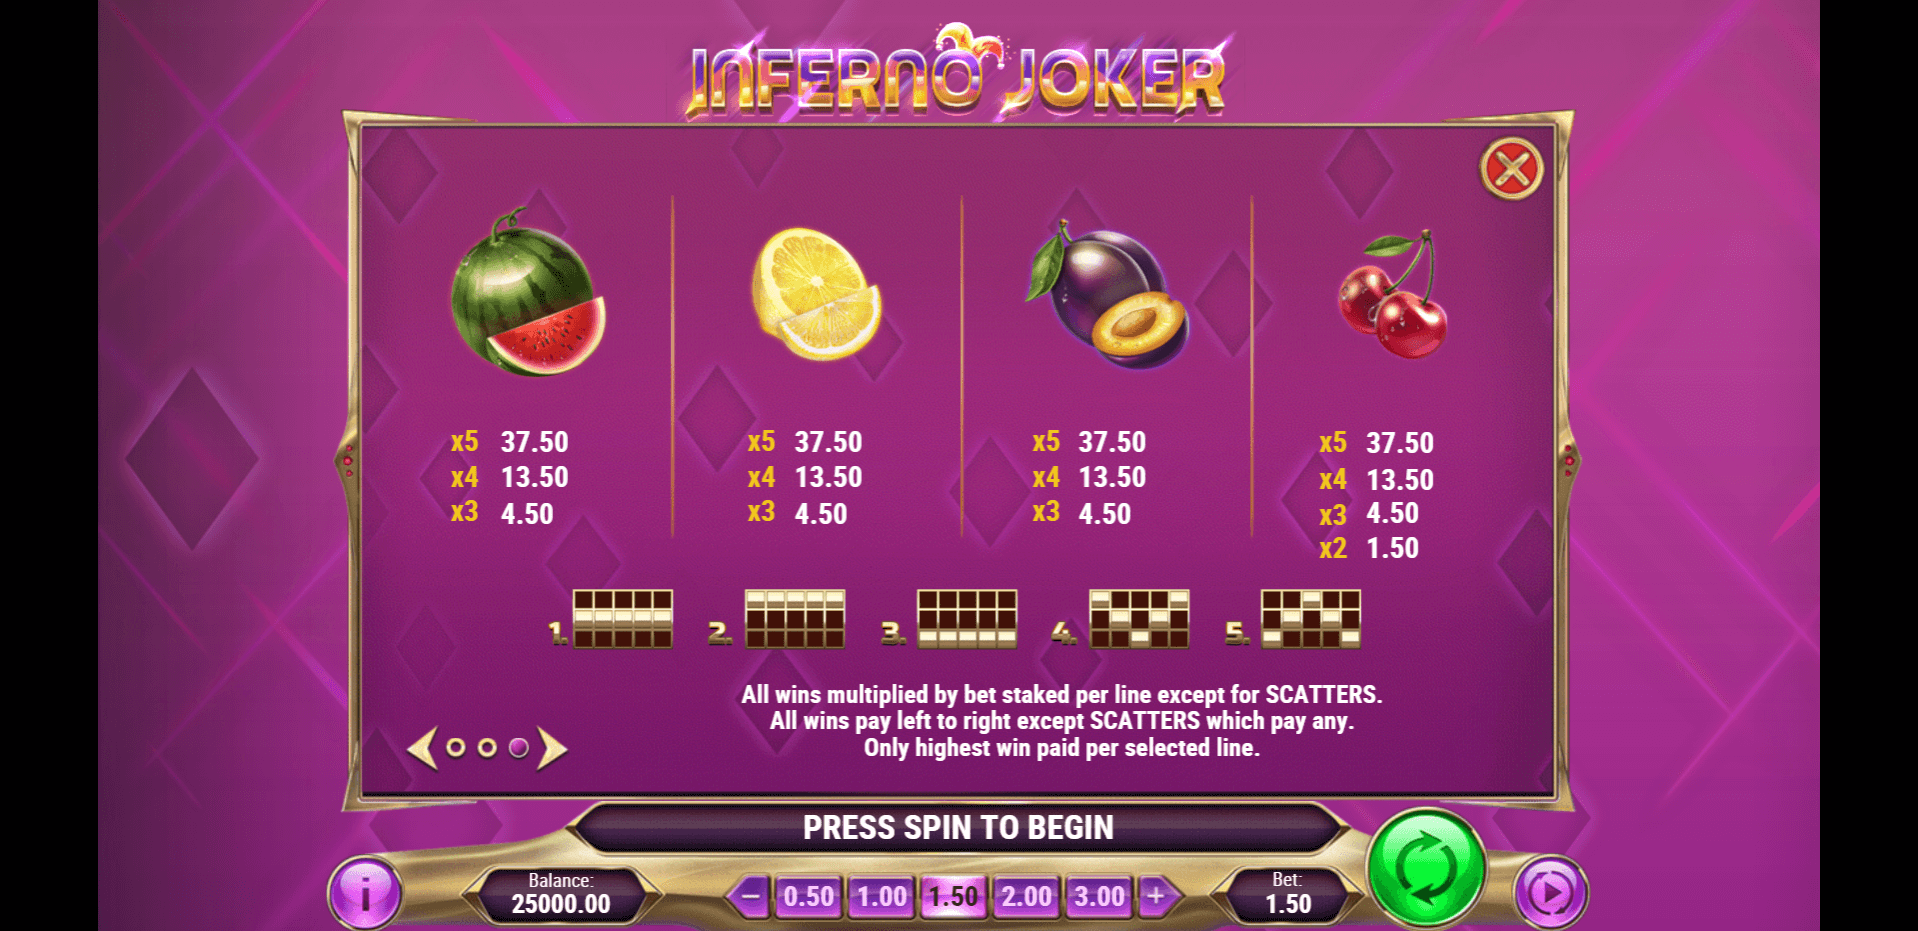 inferno joker slot machine detail image 2